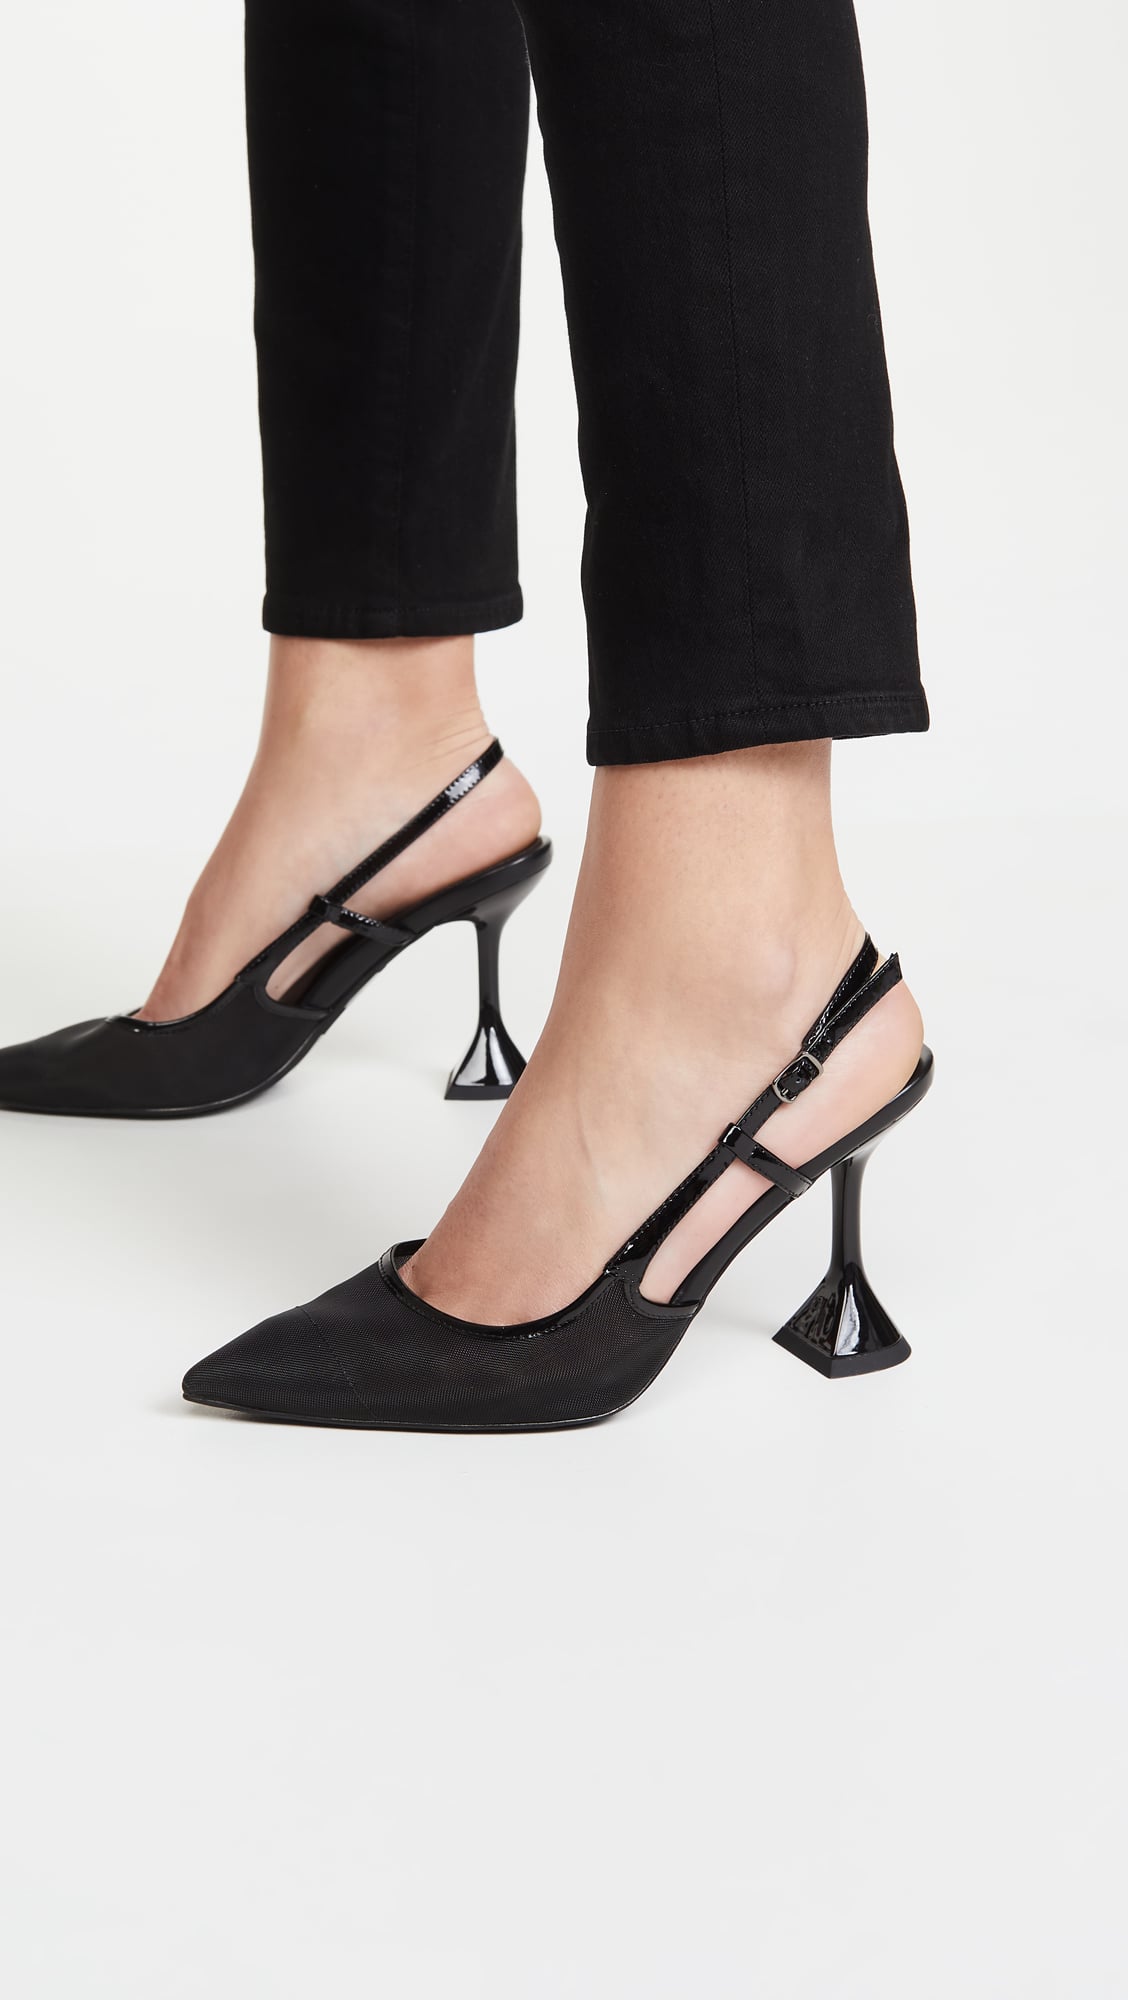 Buy > latest fashion heels > in stock